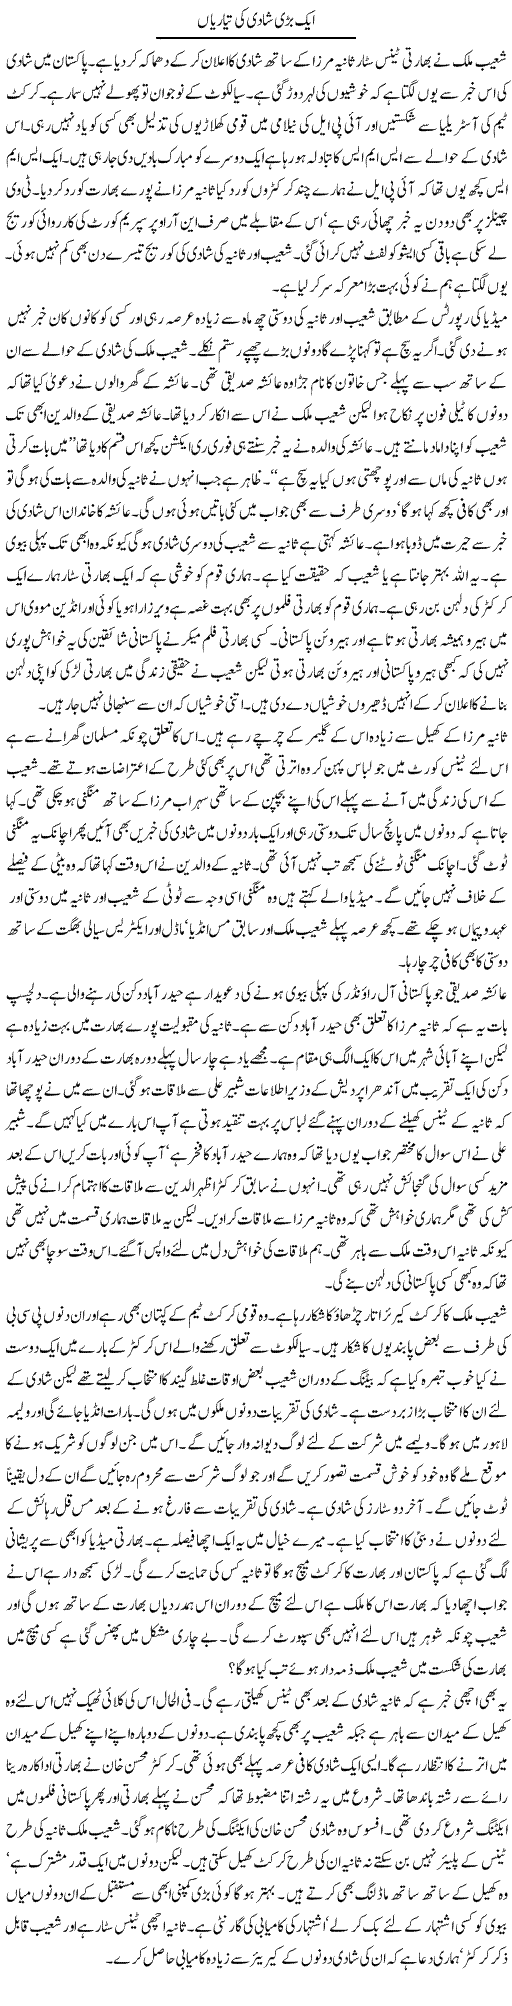 Shaadi ki tyari Express Column Iyaz Khan 1 April 2010